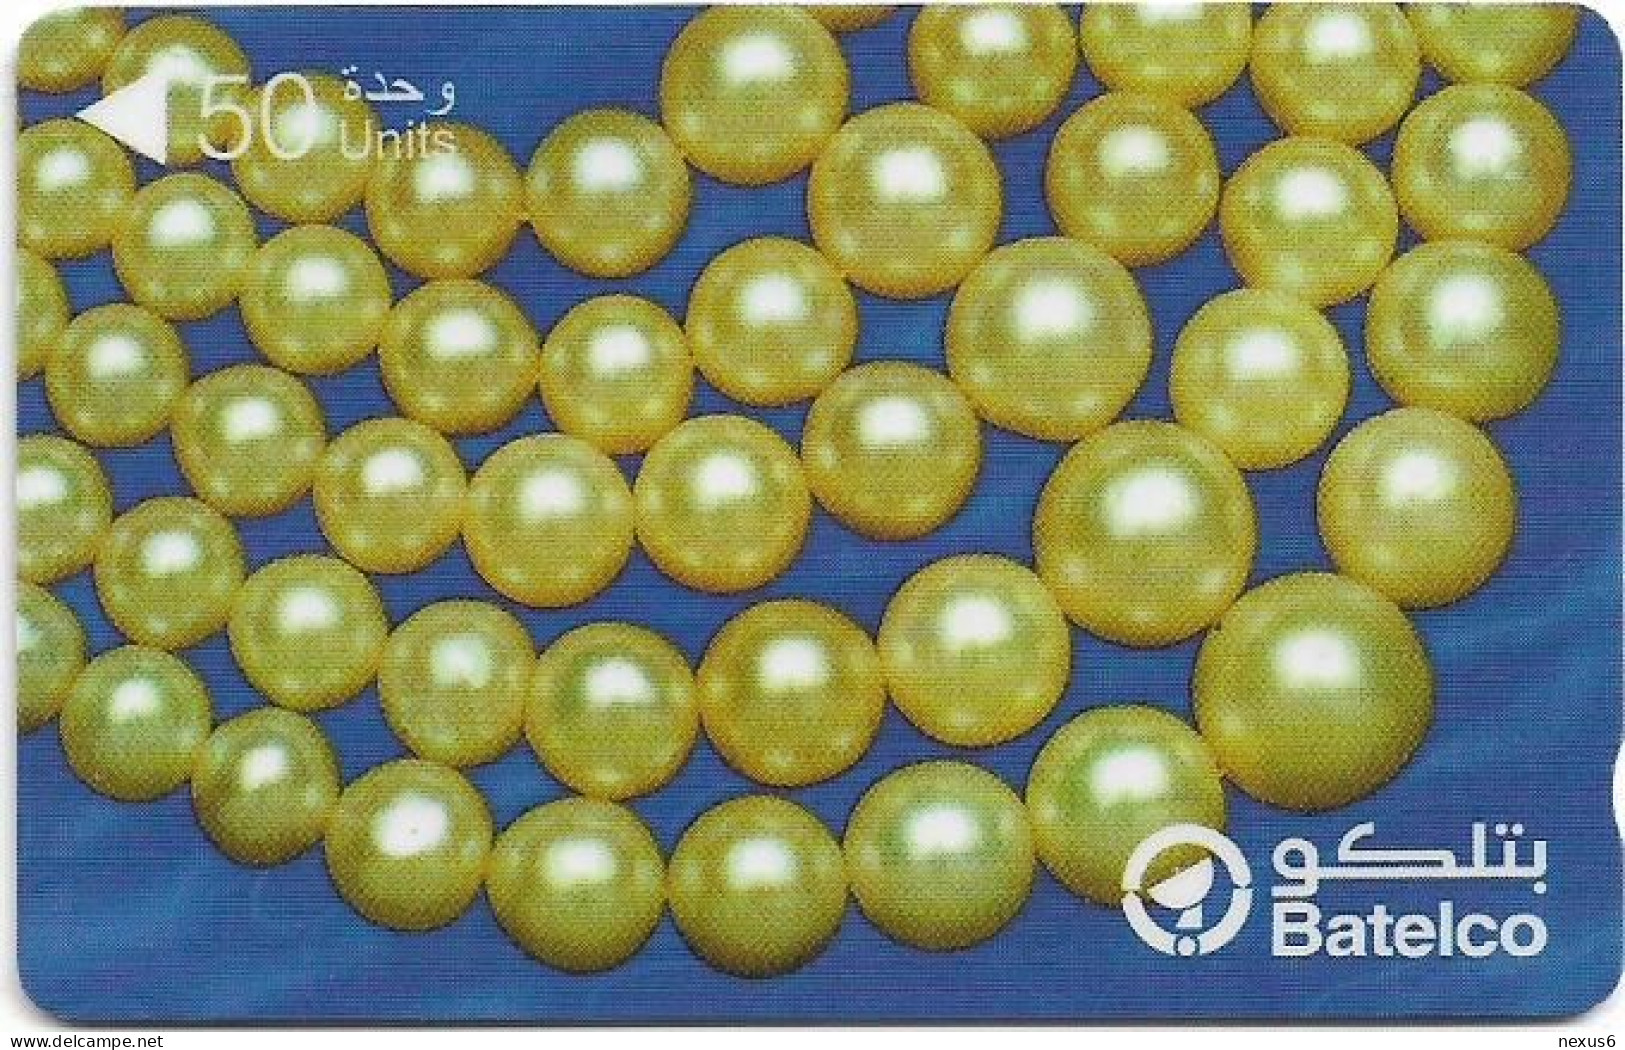 Bahrain - Batelco (GPT) - Pearls 2 - 52BAHB (Normal 0) - 2001, Used - Bahreïn